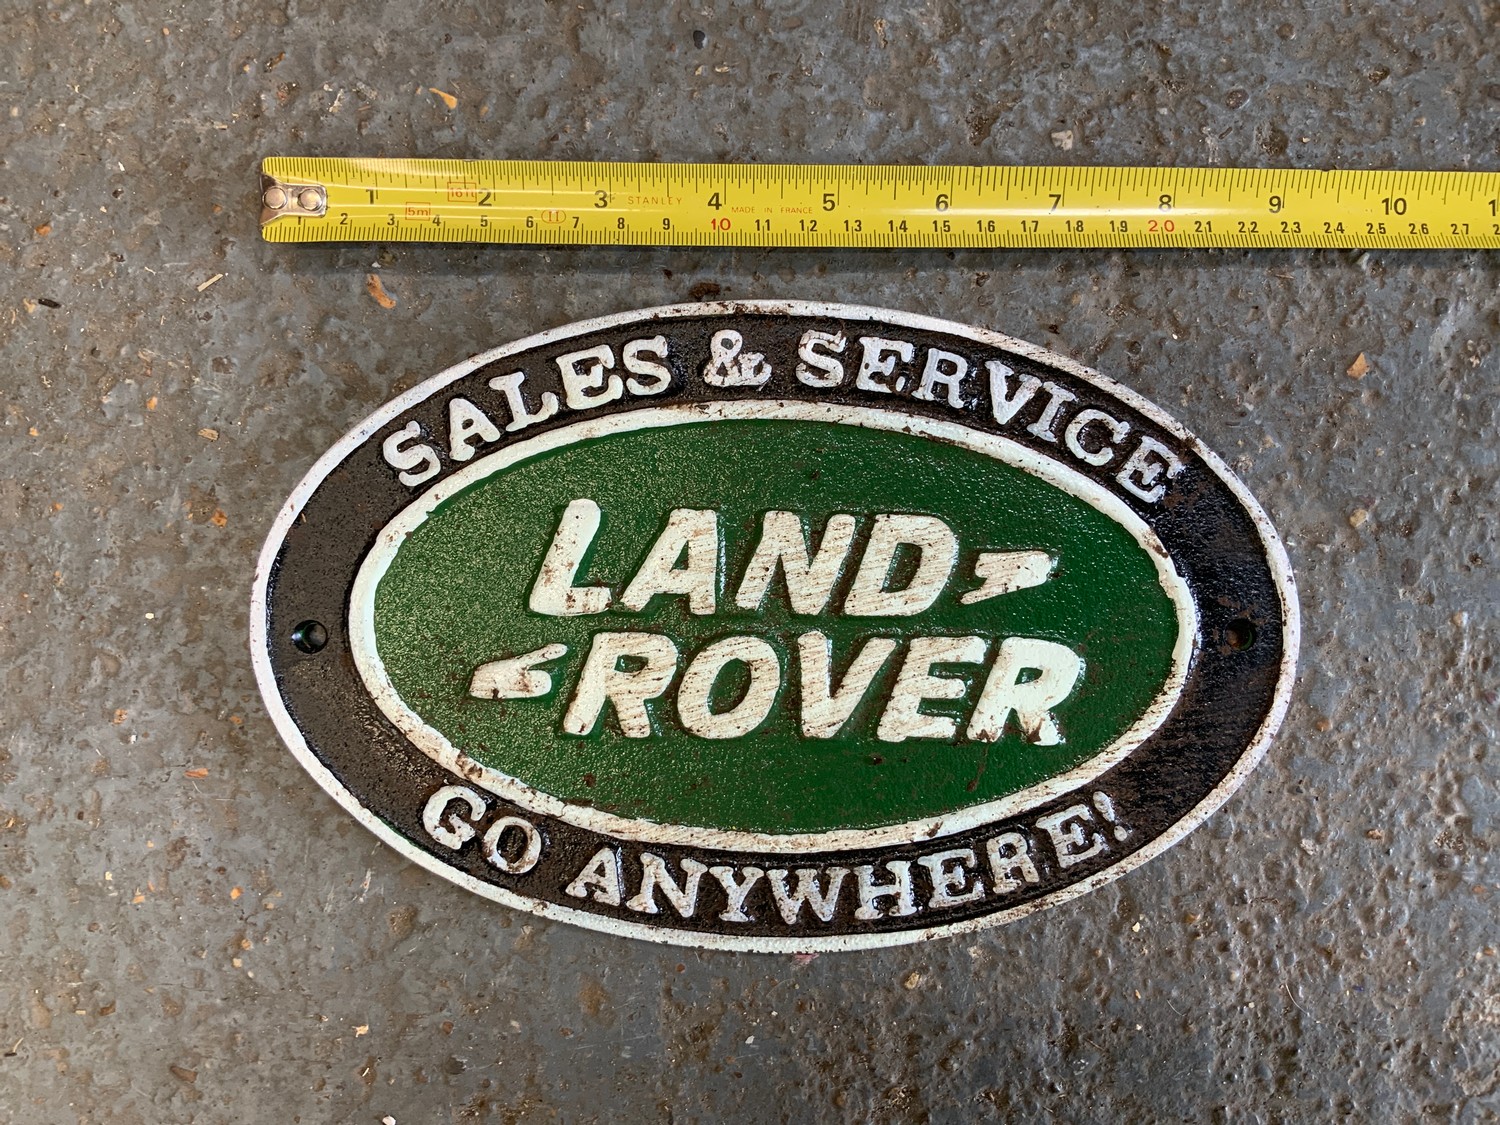 Metal Sign - Land Rover